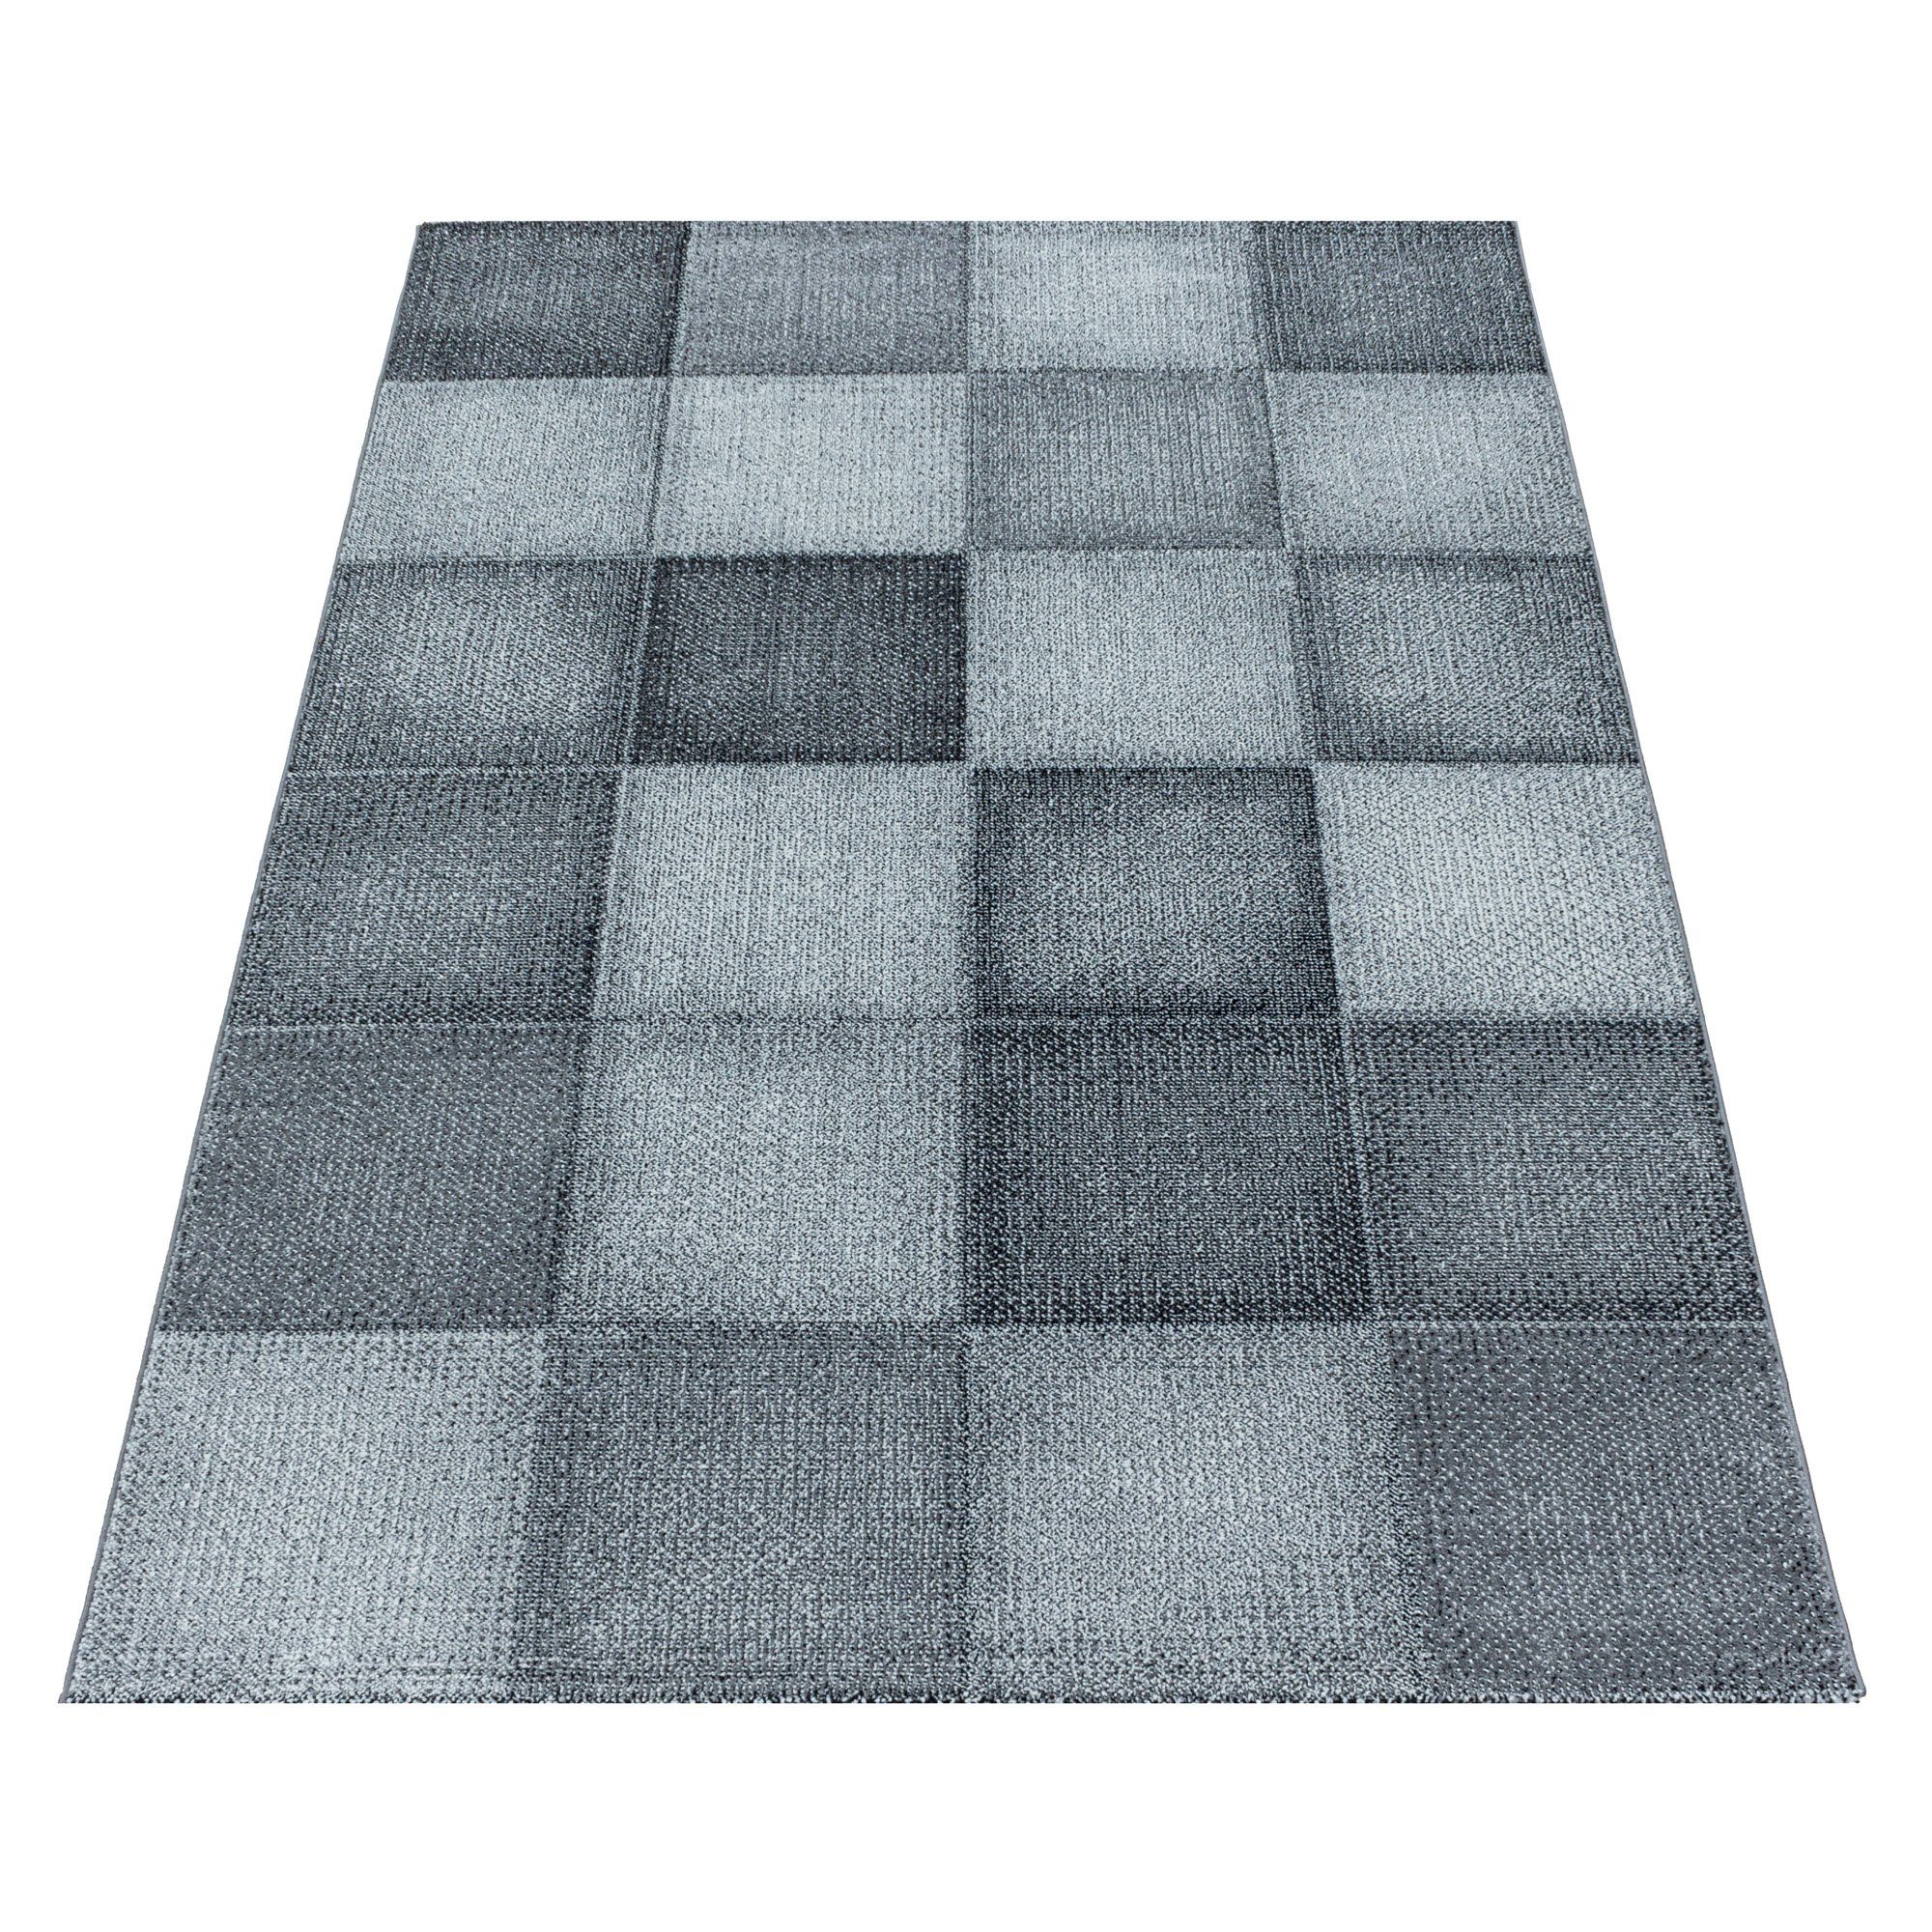 Frisé-Teppich Teppich Kariert Kariert Modern Carpetsale24, Wohnzimmer Kurzflor Design, größen Läufer, 8 mm, Design Höhe: verschidene